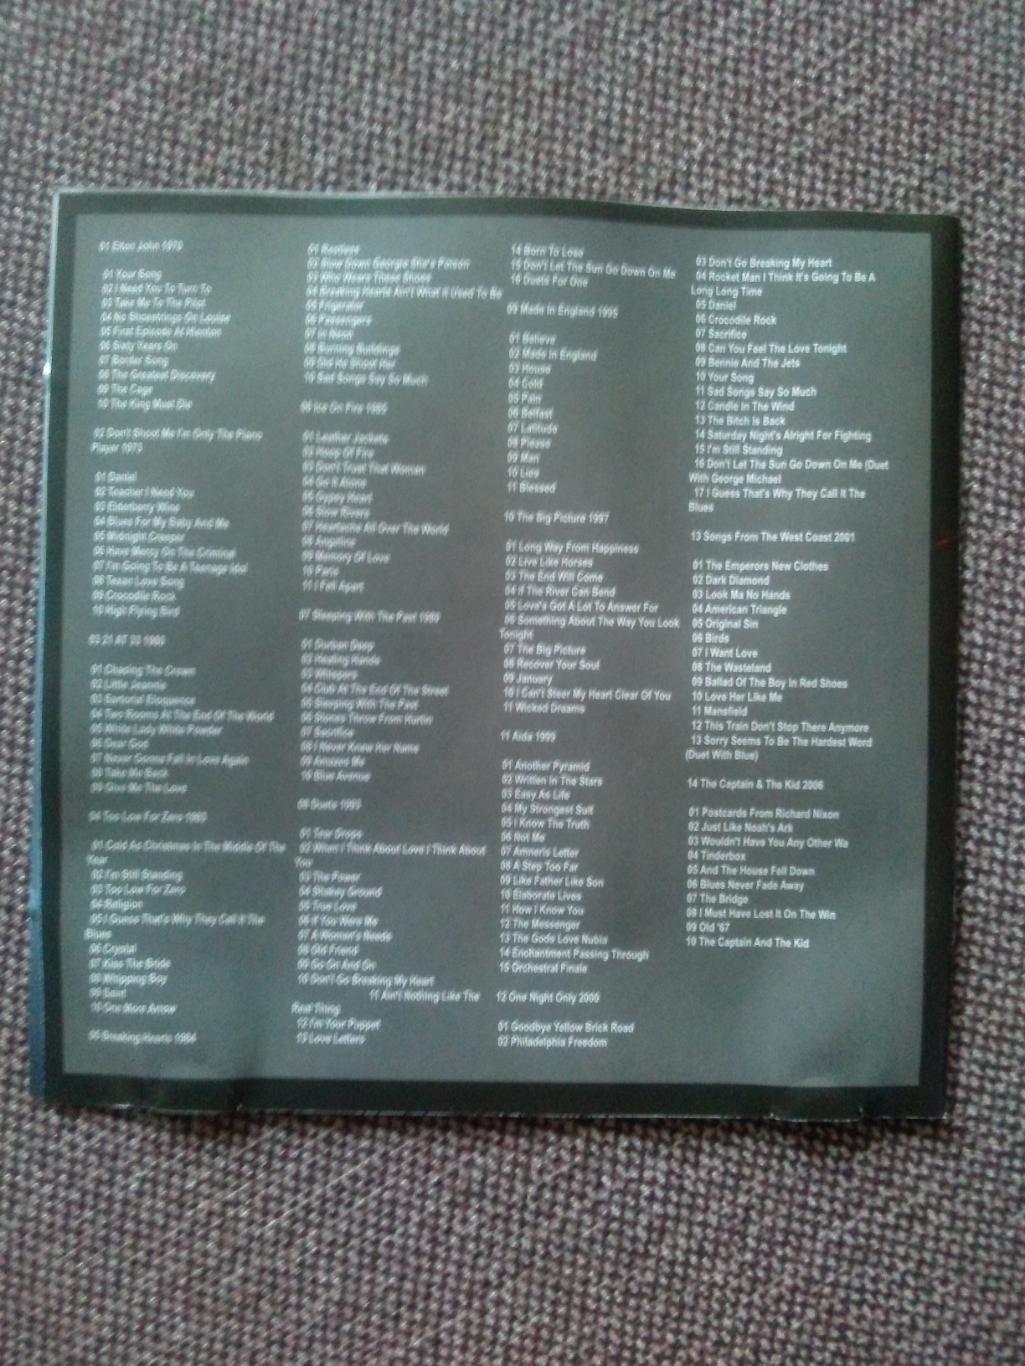 MP - 3 CD диск : Elton John (Элтон Джон) 1970 - 2006 гг. (14 альбомов) Рок 1